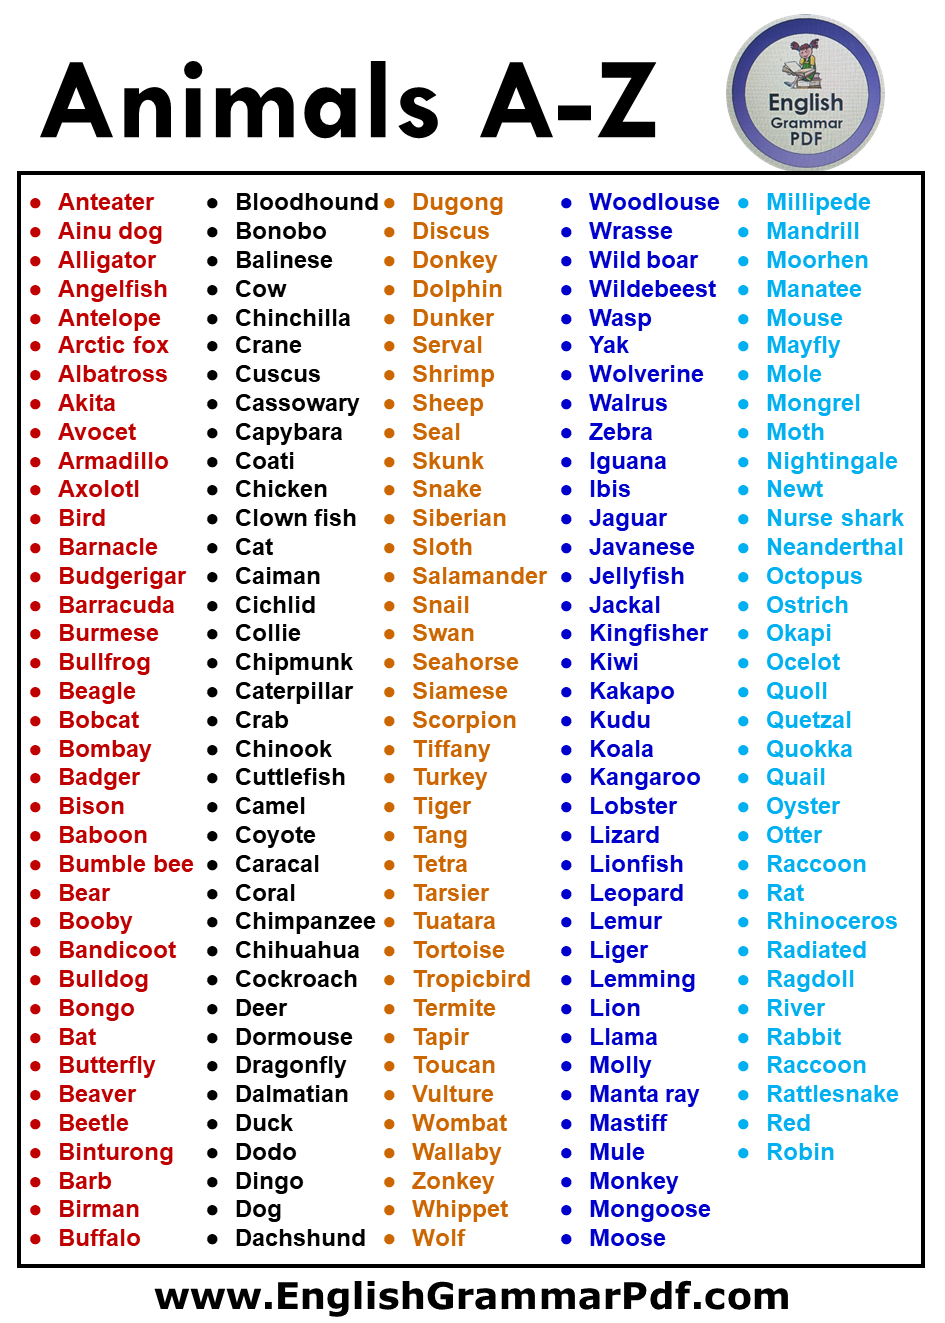 forfængelighed Caroline systematisk 400 Animal Names From A to Z PDF - English Grammar Pdf